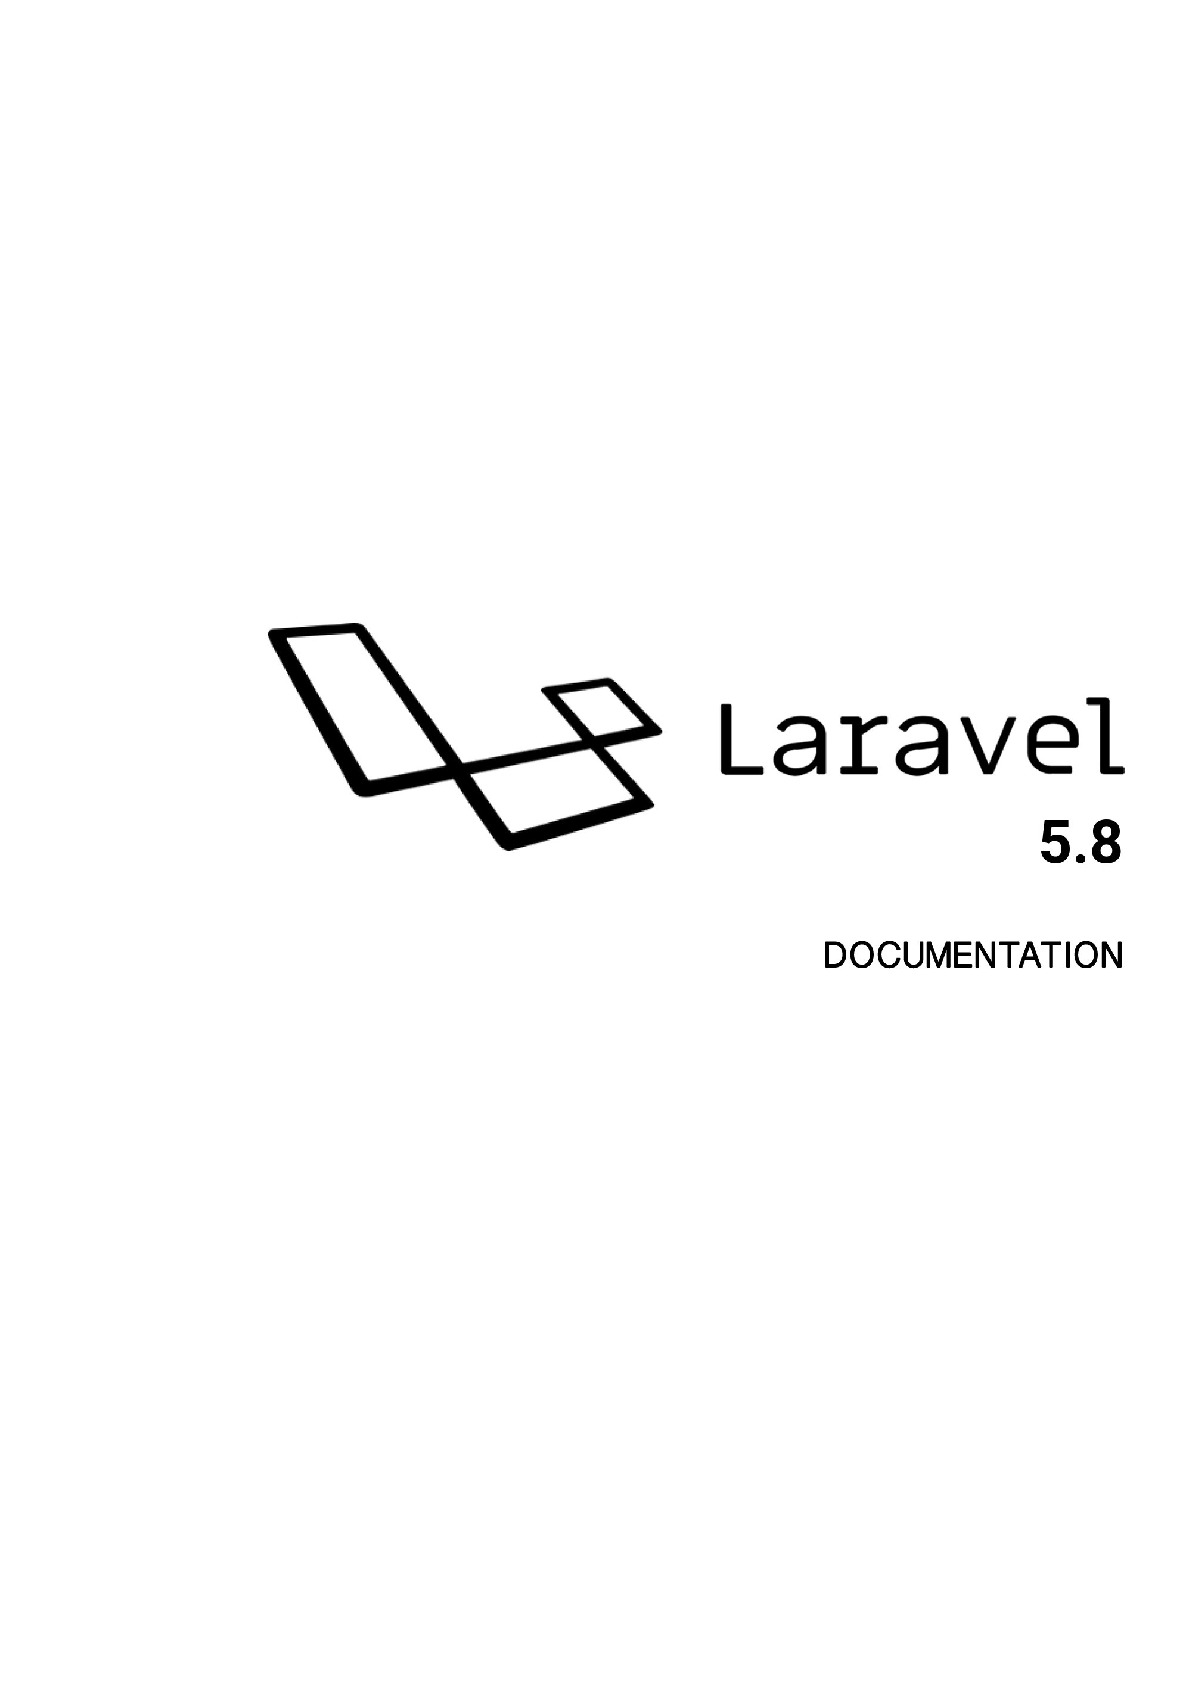 laravel-docs-5.8